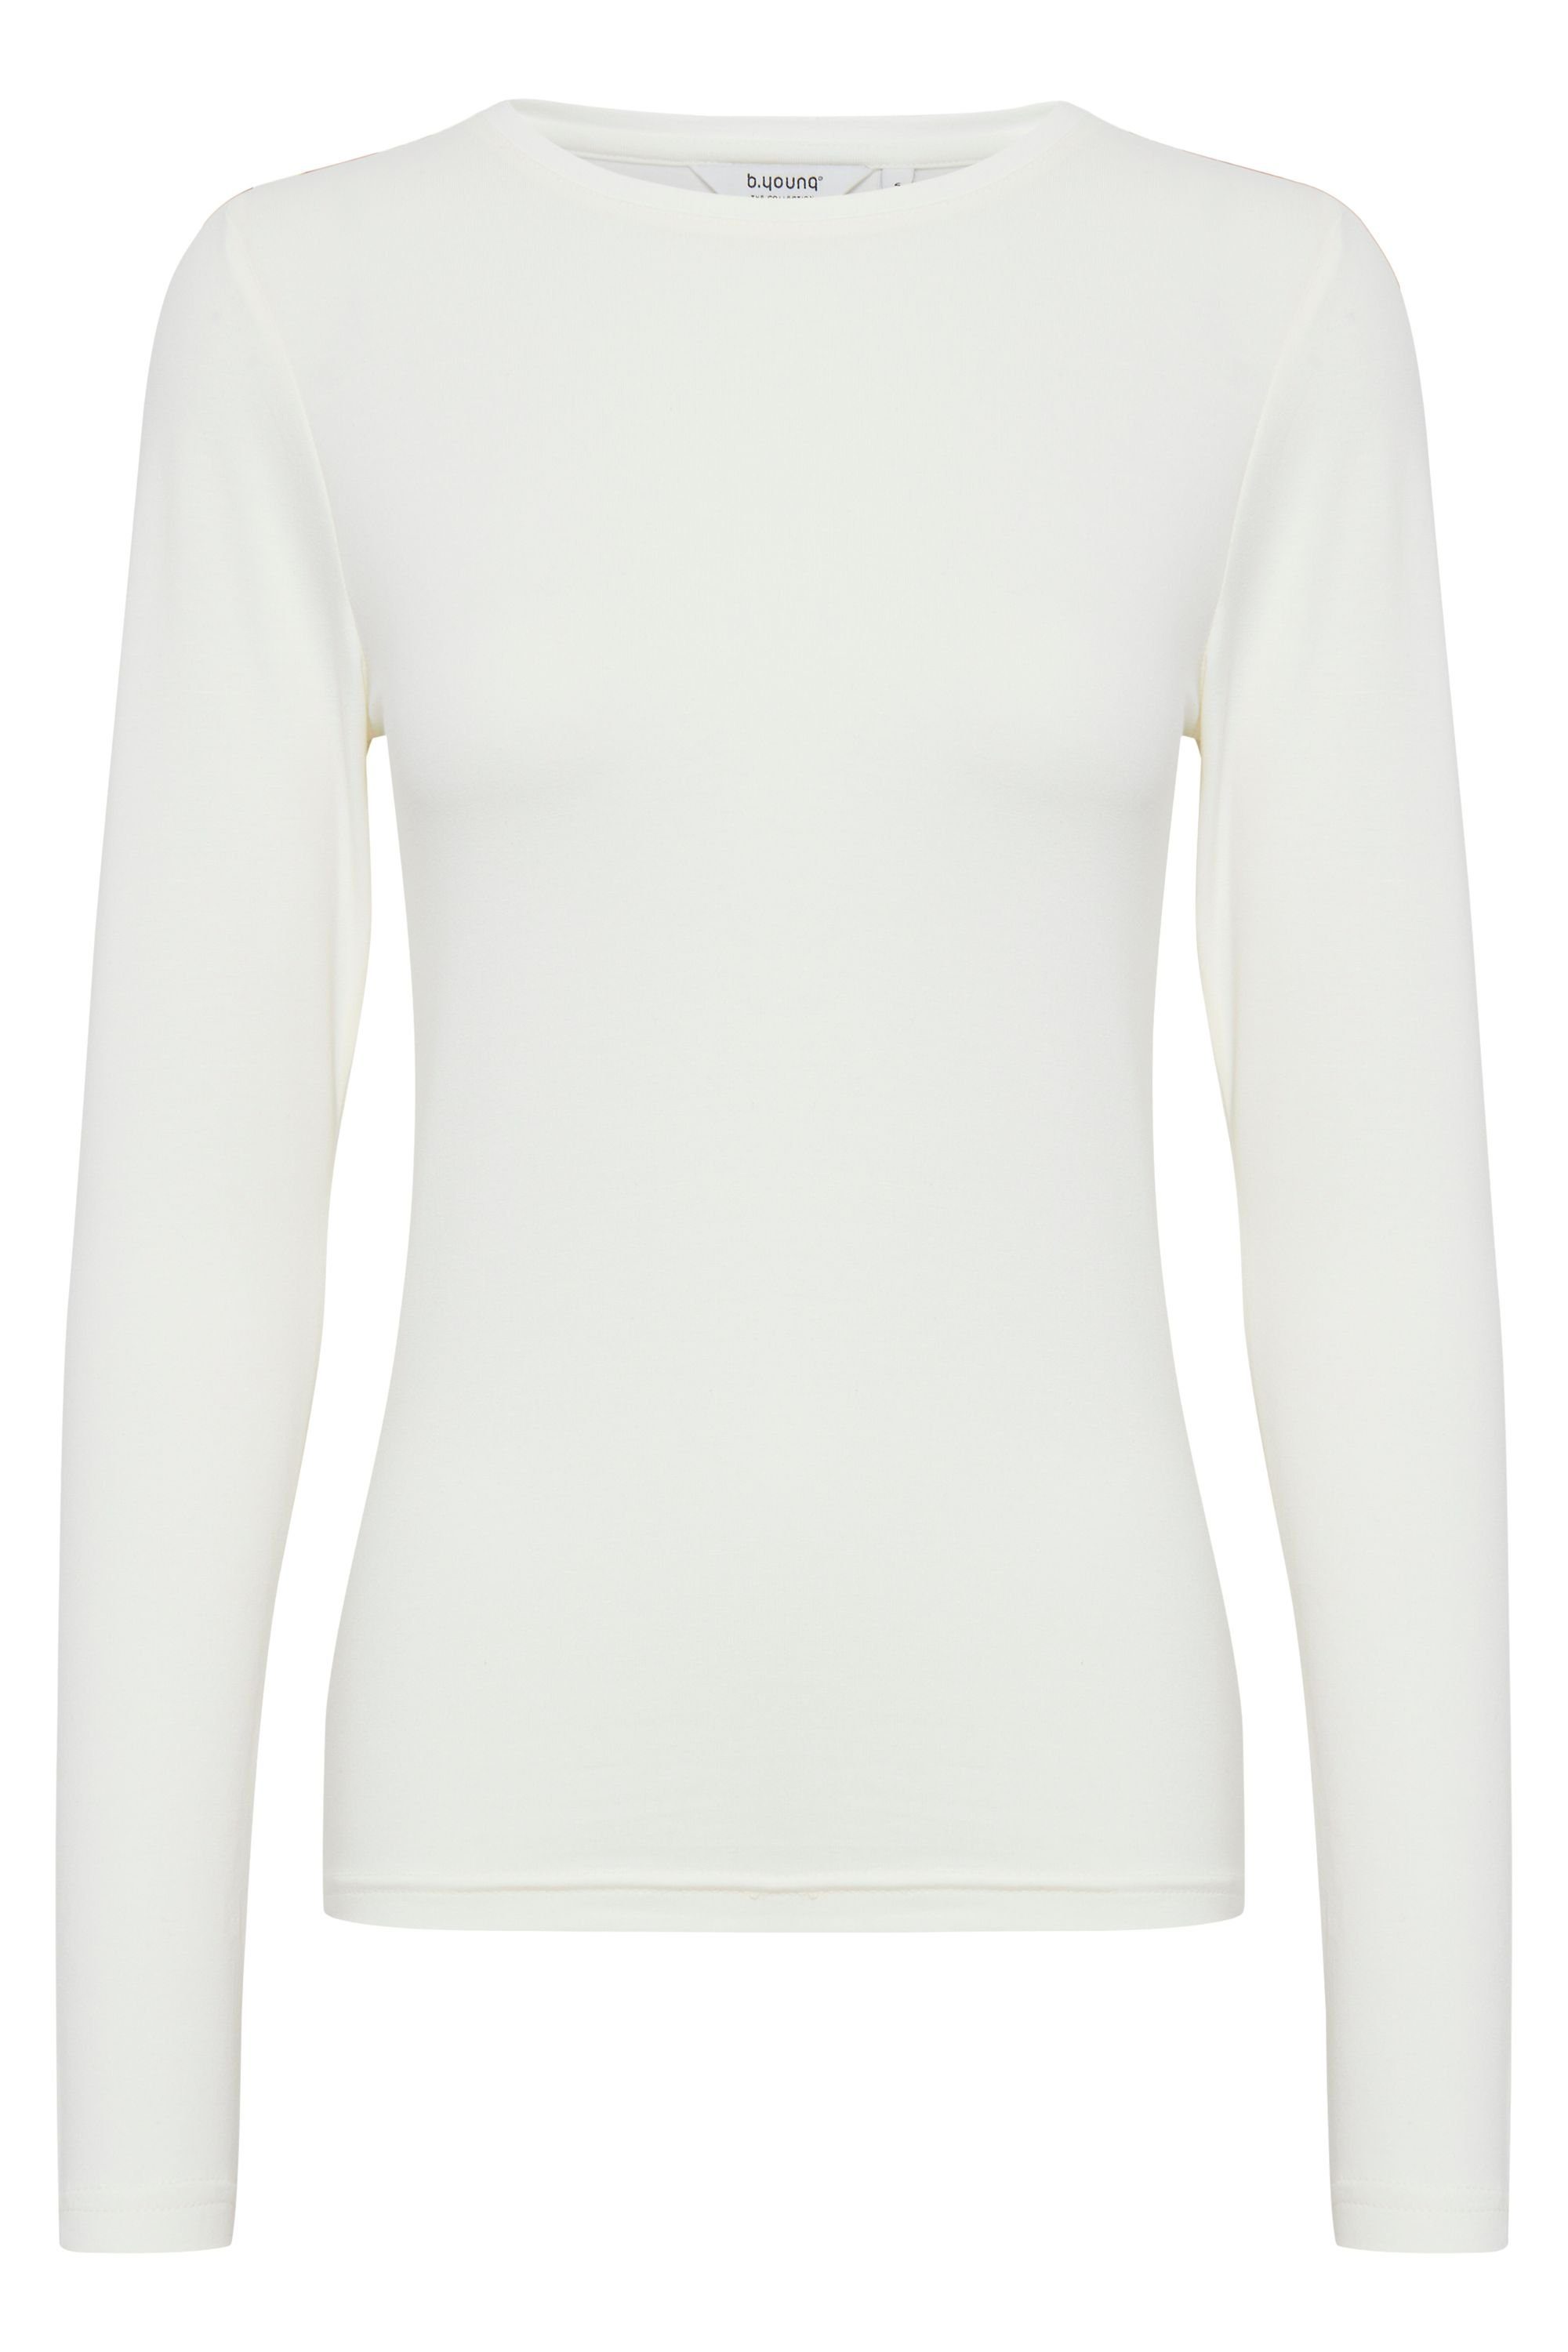 White TSHIRT Sweatshirt BYPAMILA Longsleeve Off -20807594 Basic (80115) LS b.young